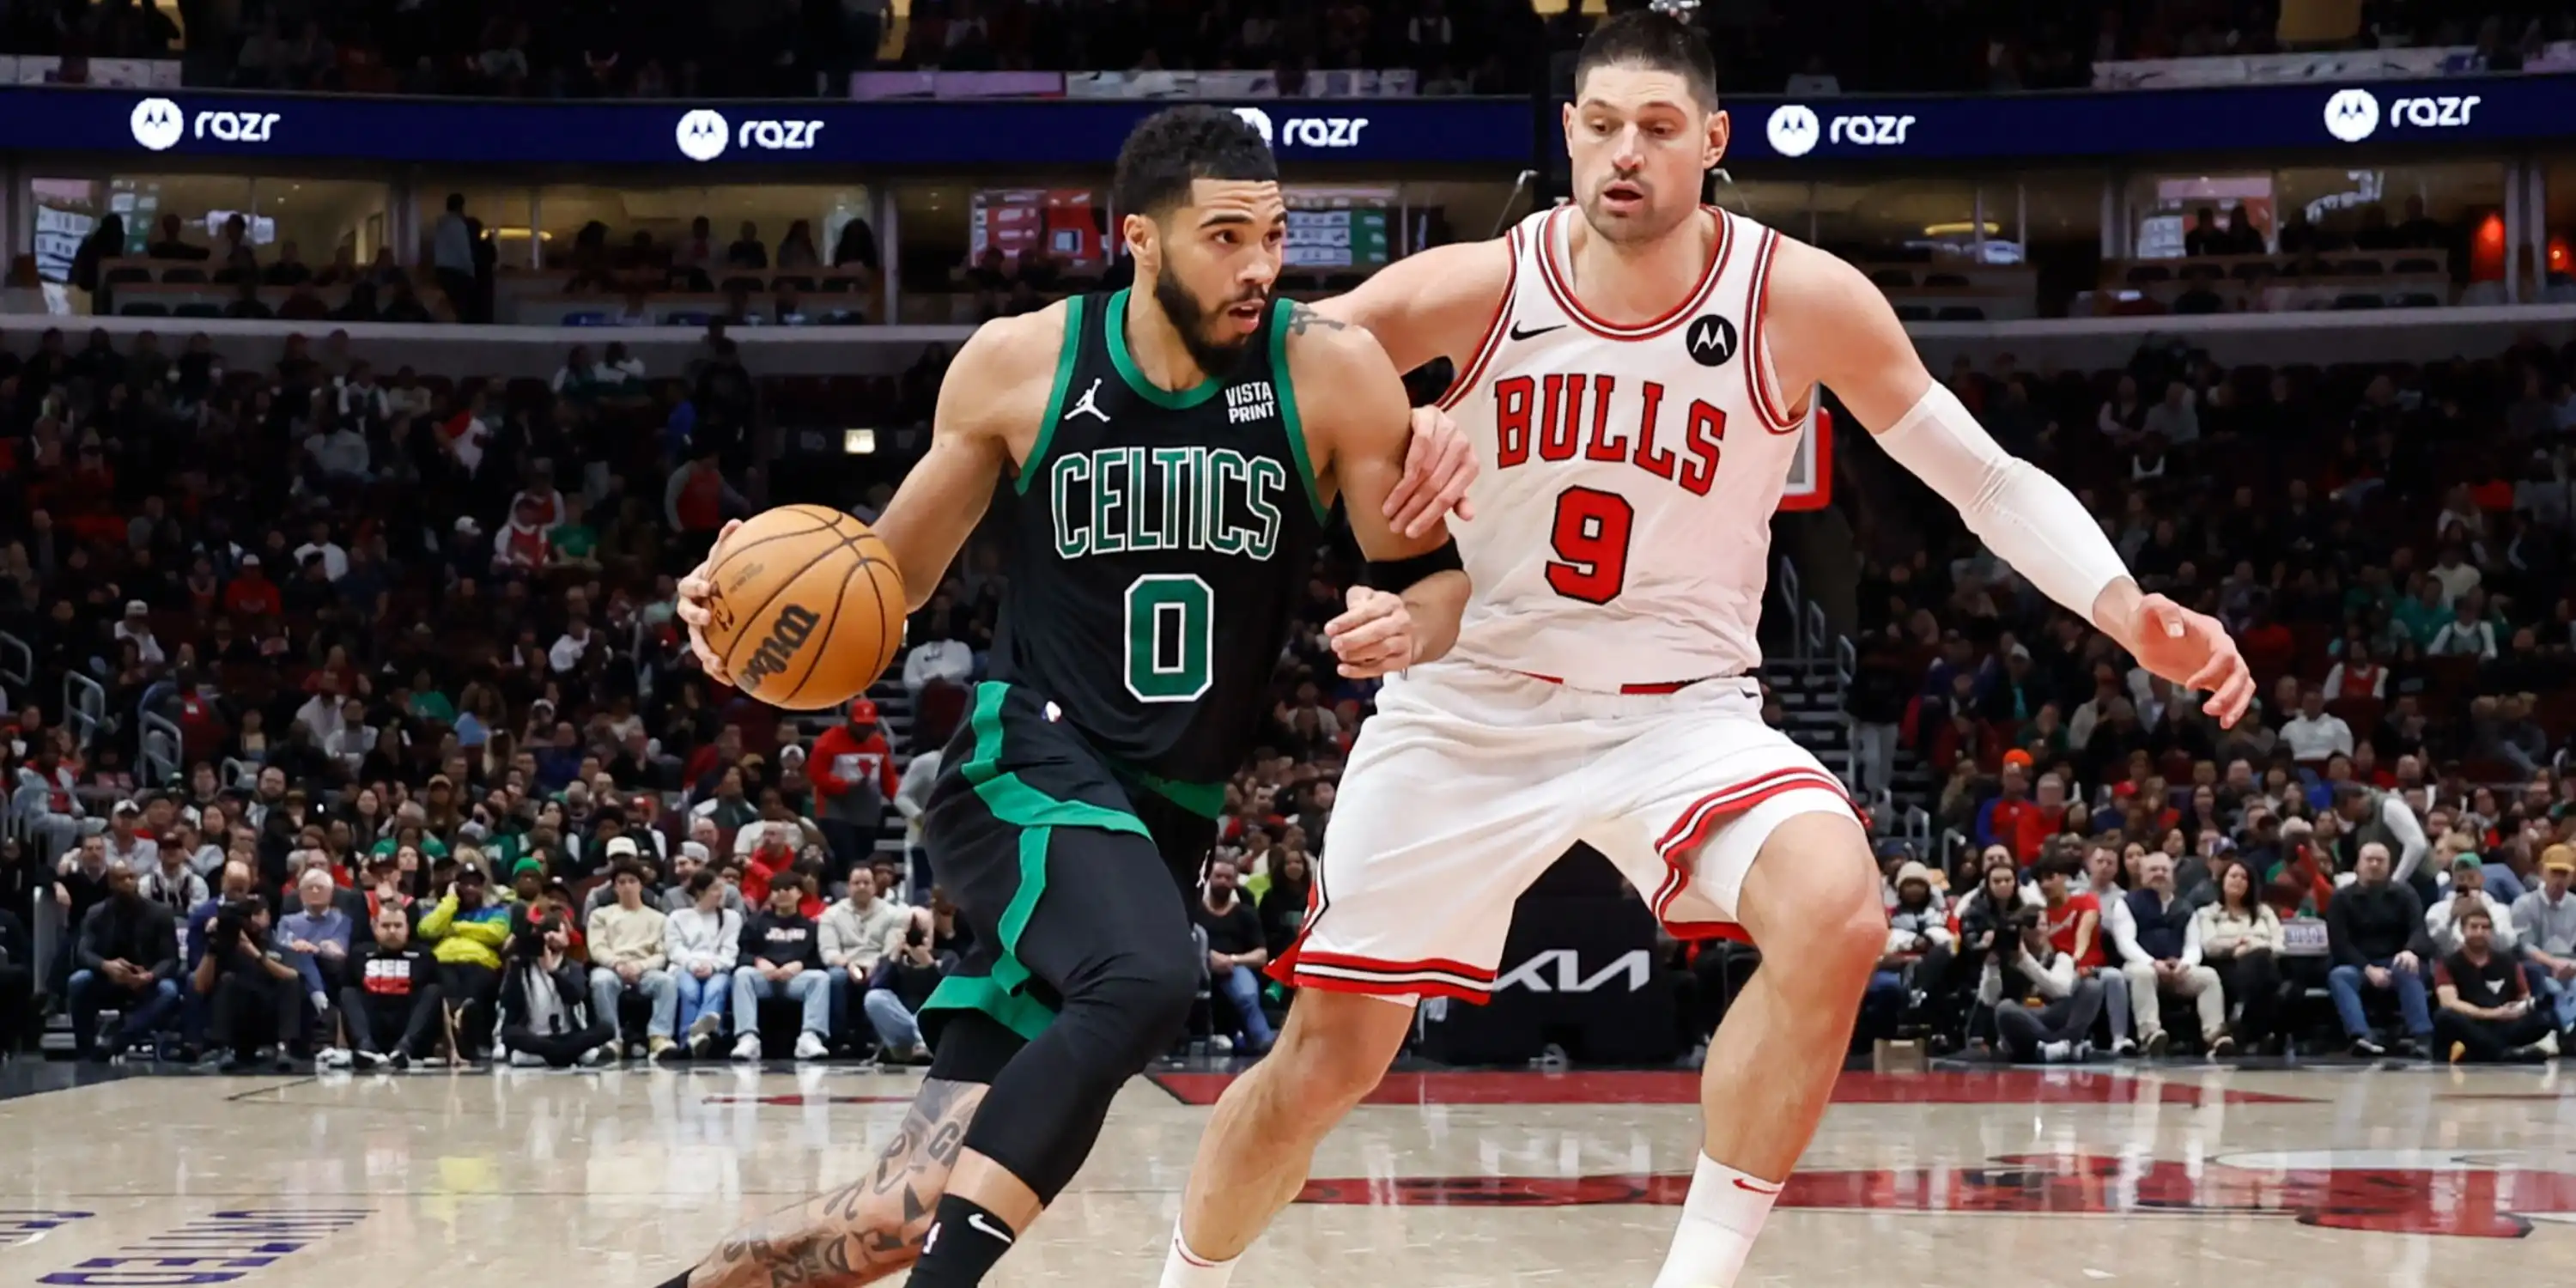 Celtics dominate Bulls with big third quarter rally